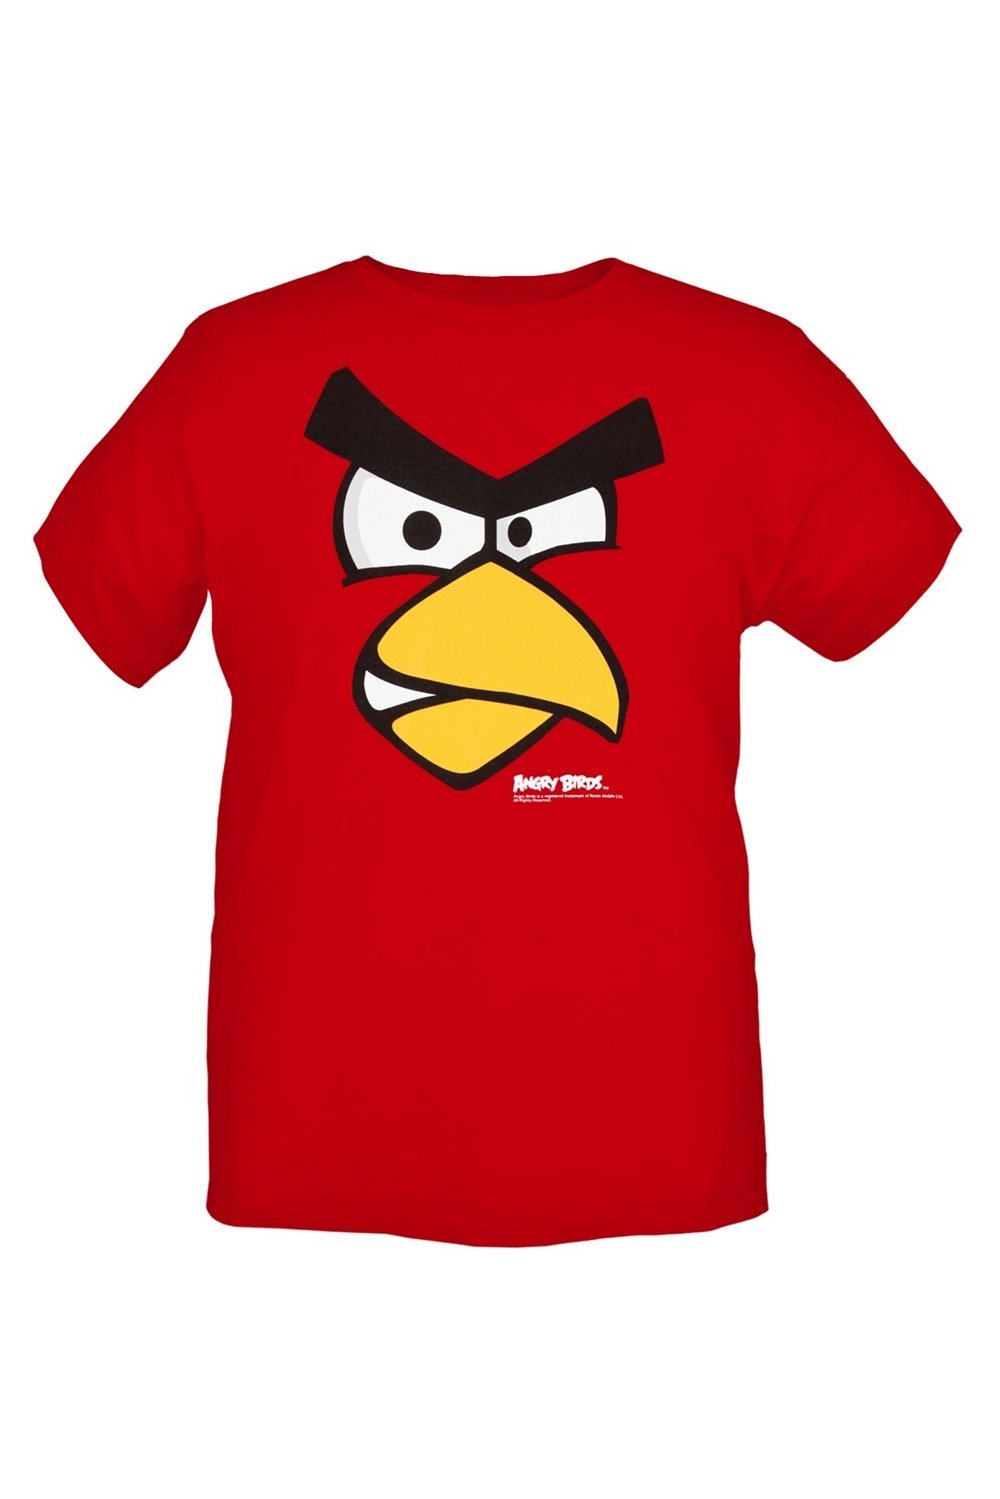 T-shirt Design | T-shirt: Angry Birds Red T-Shirt